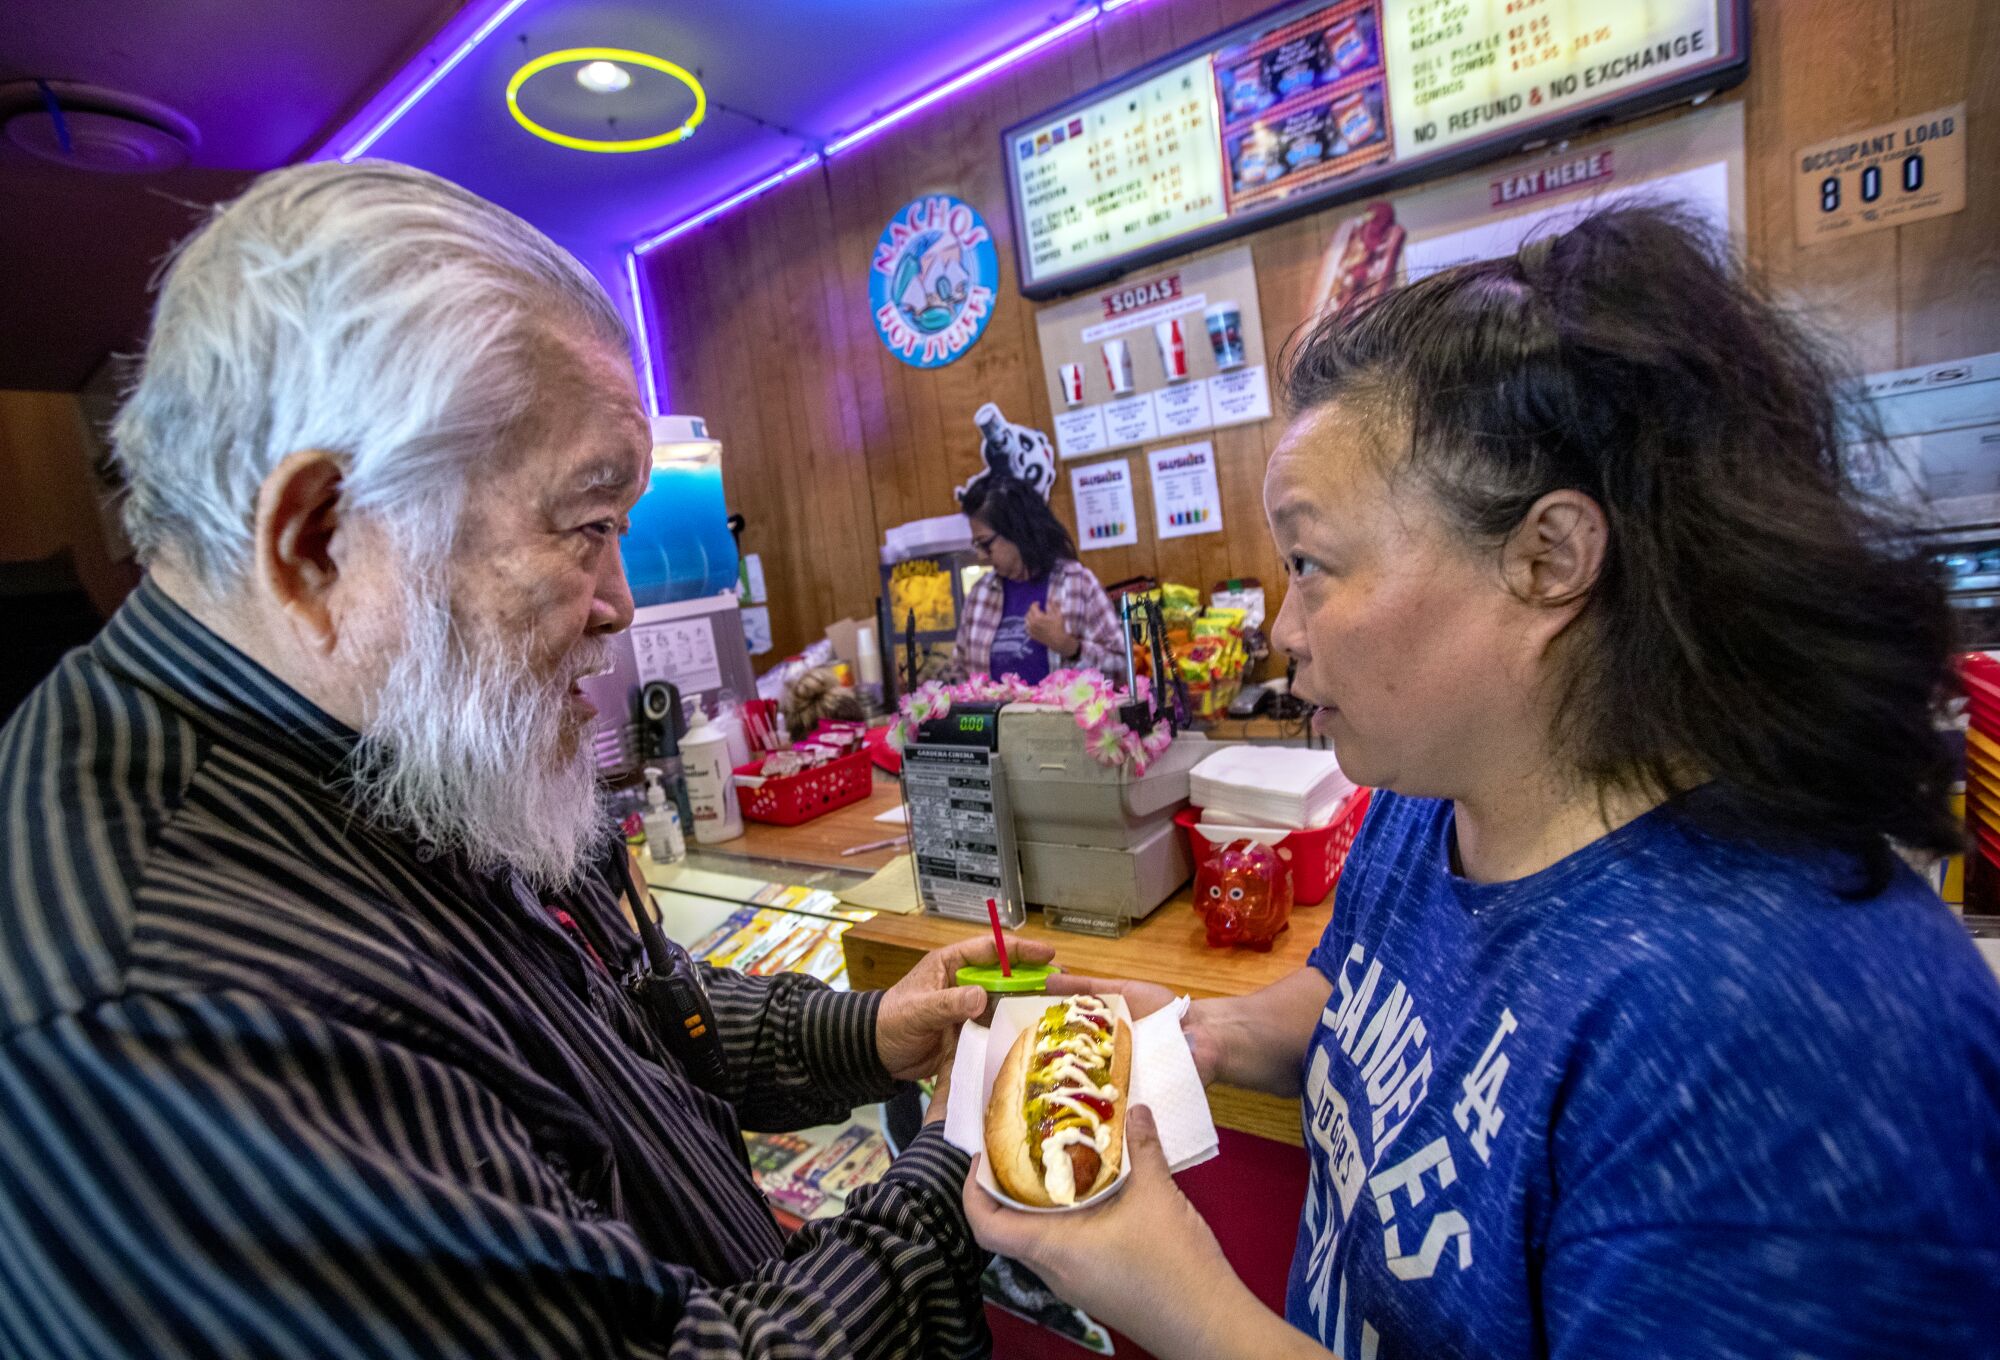 A gray-haired man talks with a woman as she hands him a hotdog inside a cinema foyer